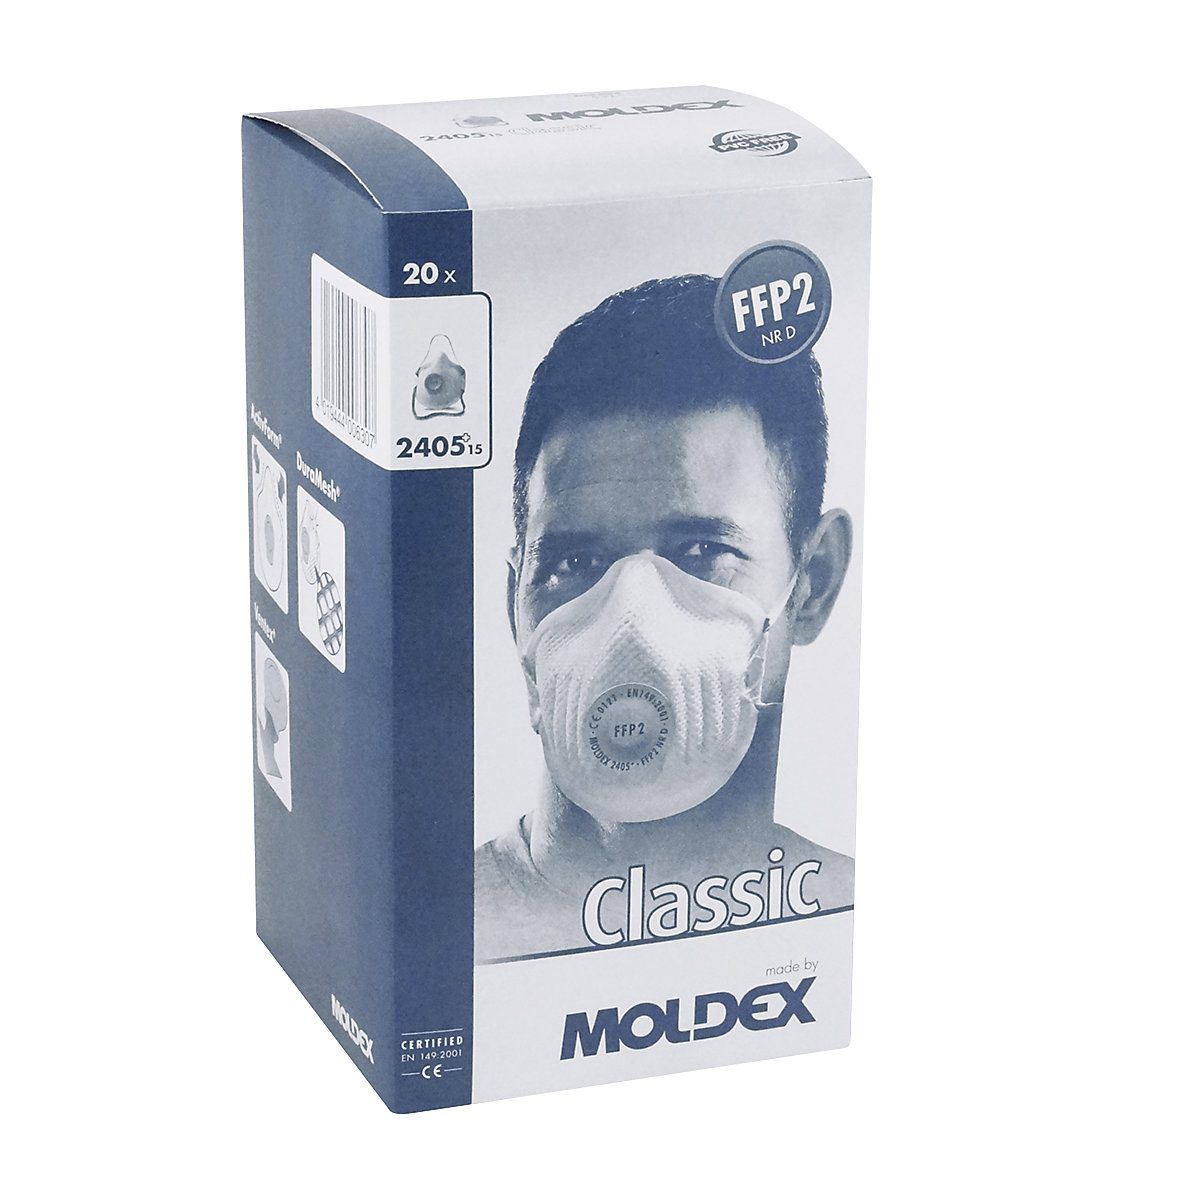 Maska ochronna FFP2 NR D – MOLDEX (Zdjęcie produktu 3)-2